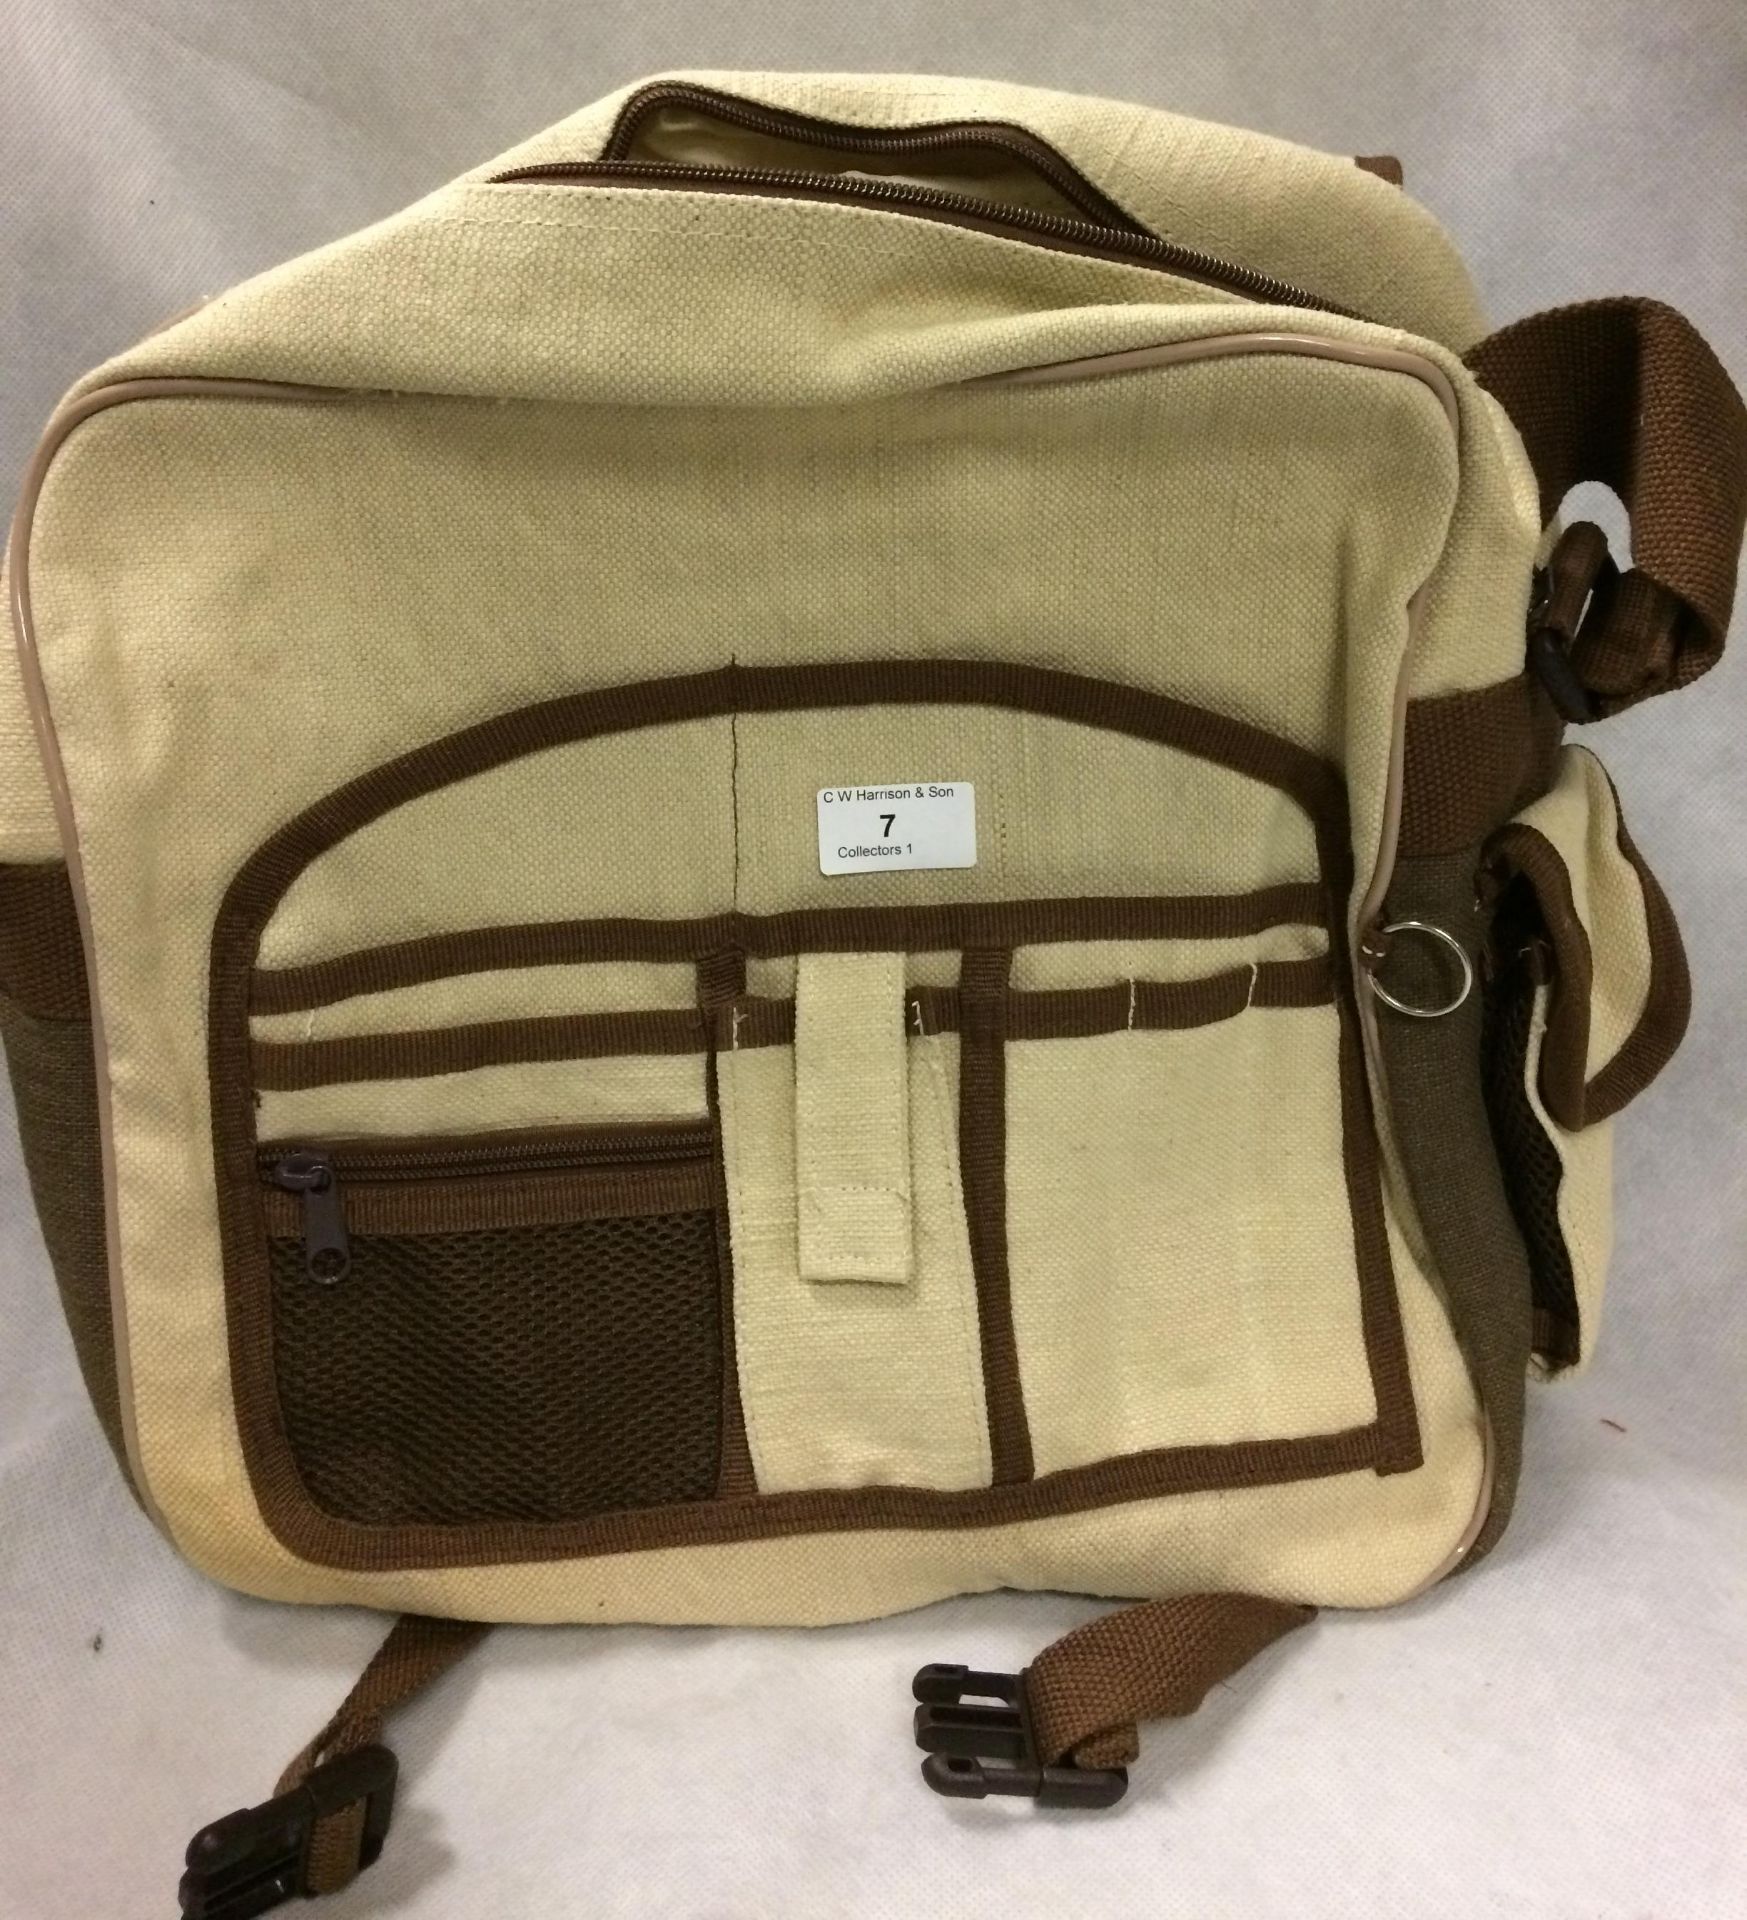 Over the shoulder canvas bag in brown (unbranded) - Image 2 of 2